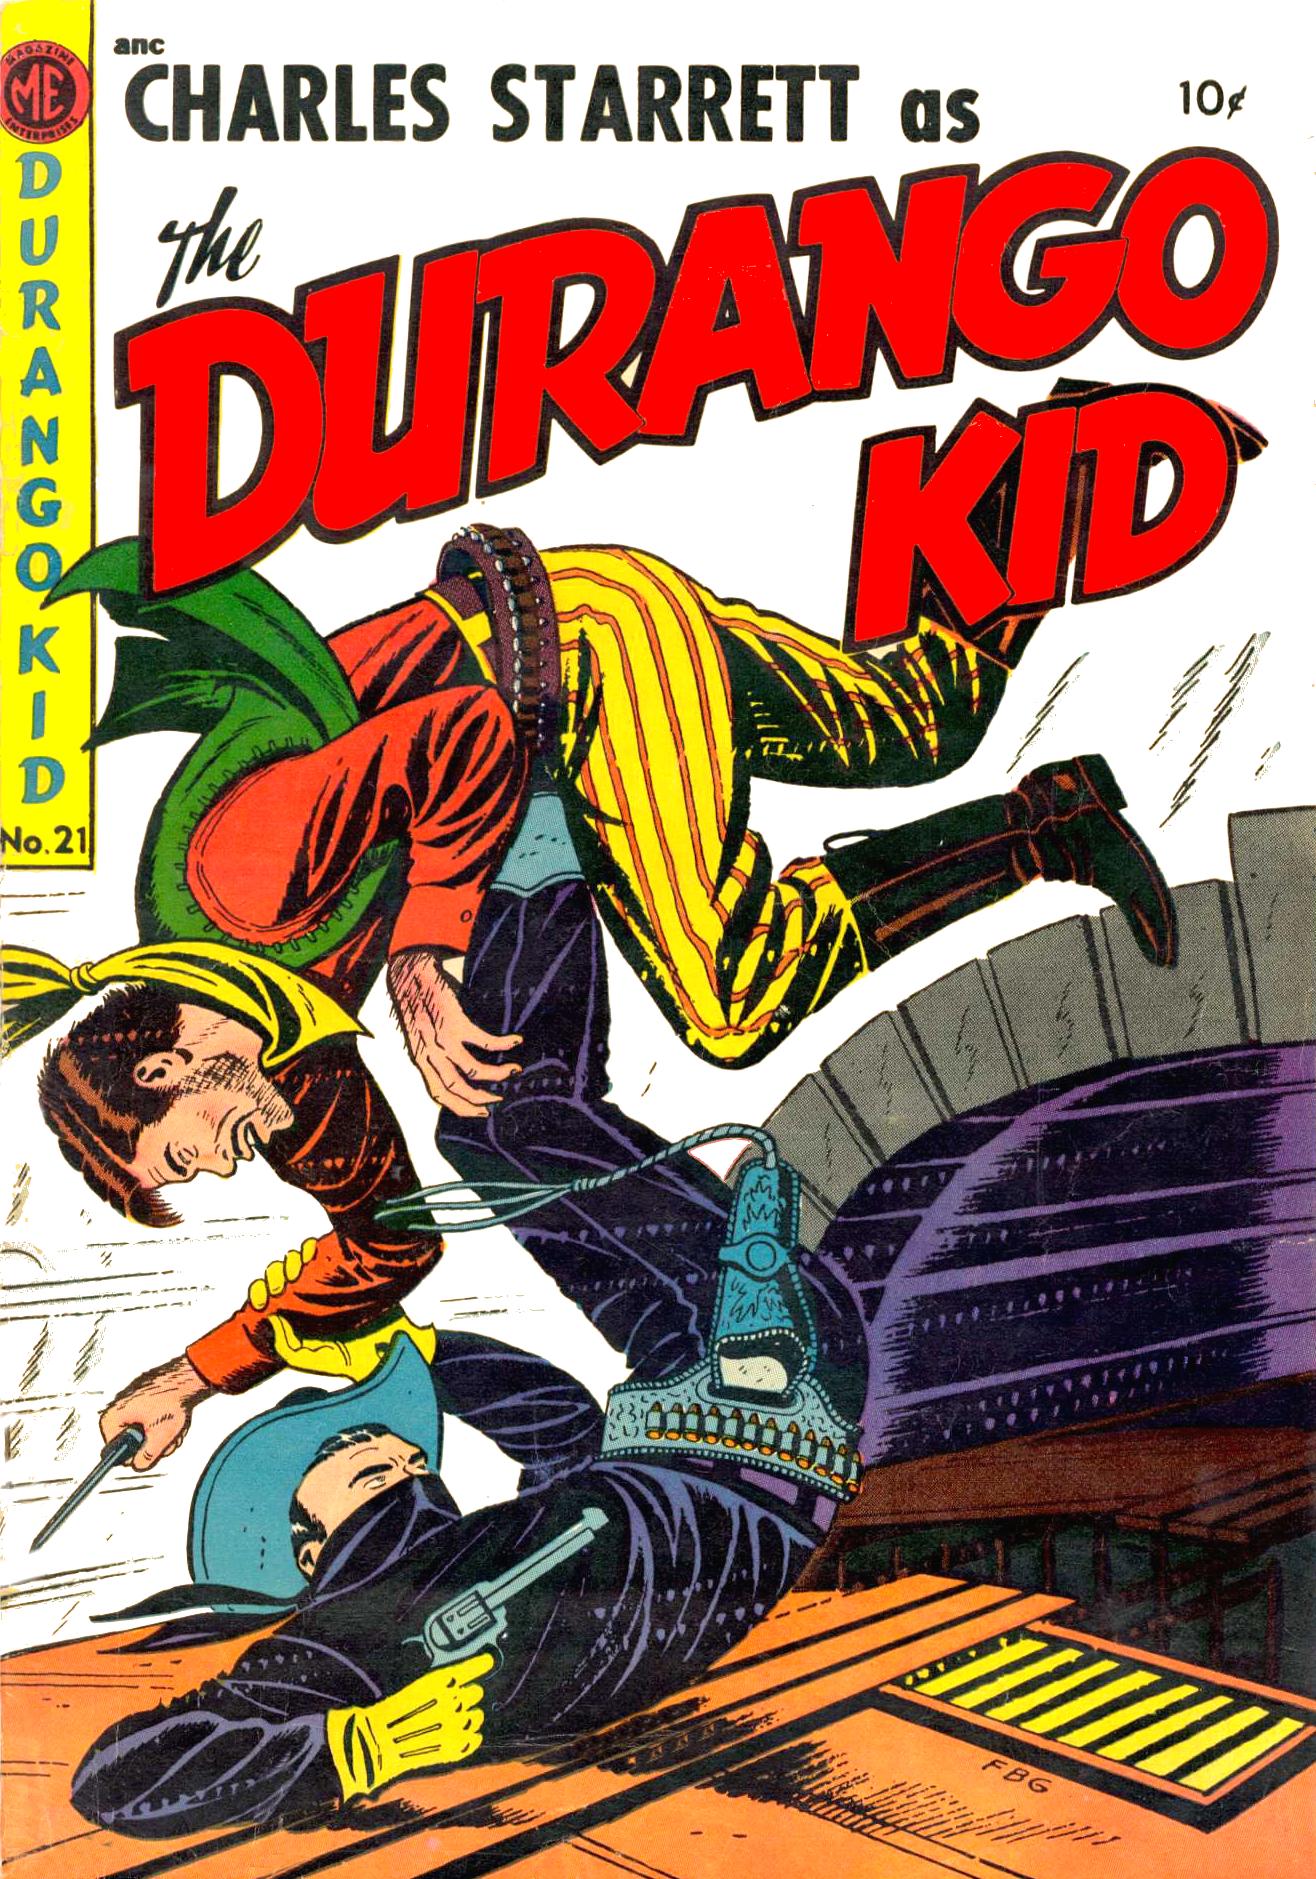 Read online Charles Starrett as The Durango Kid comic -  Issue #21 - 1